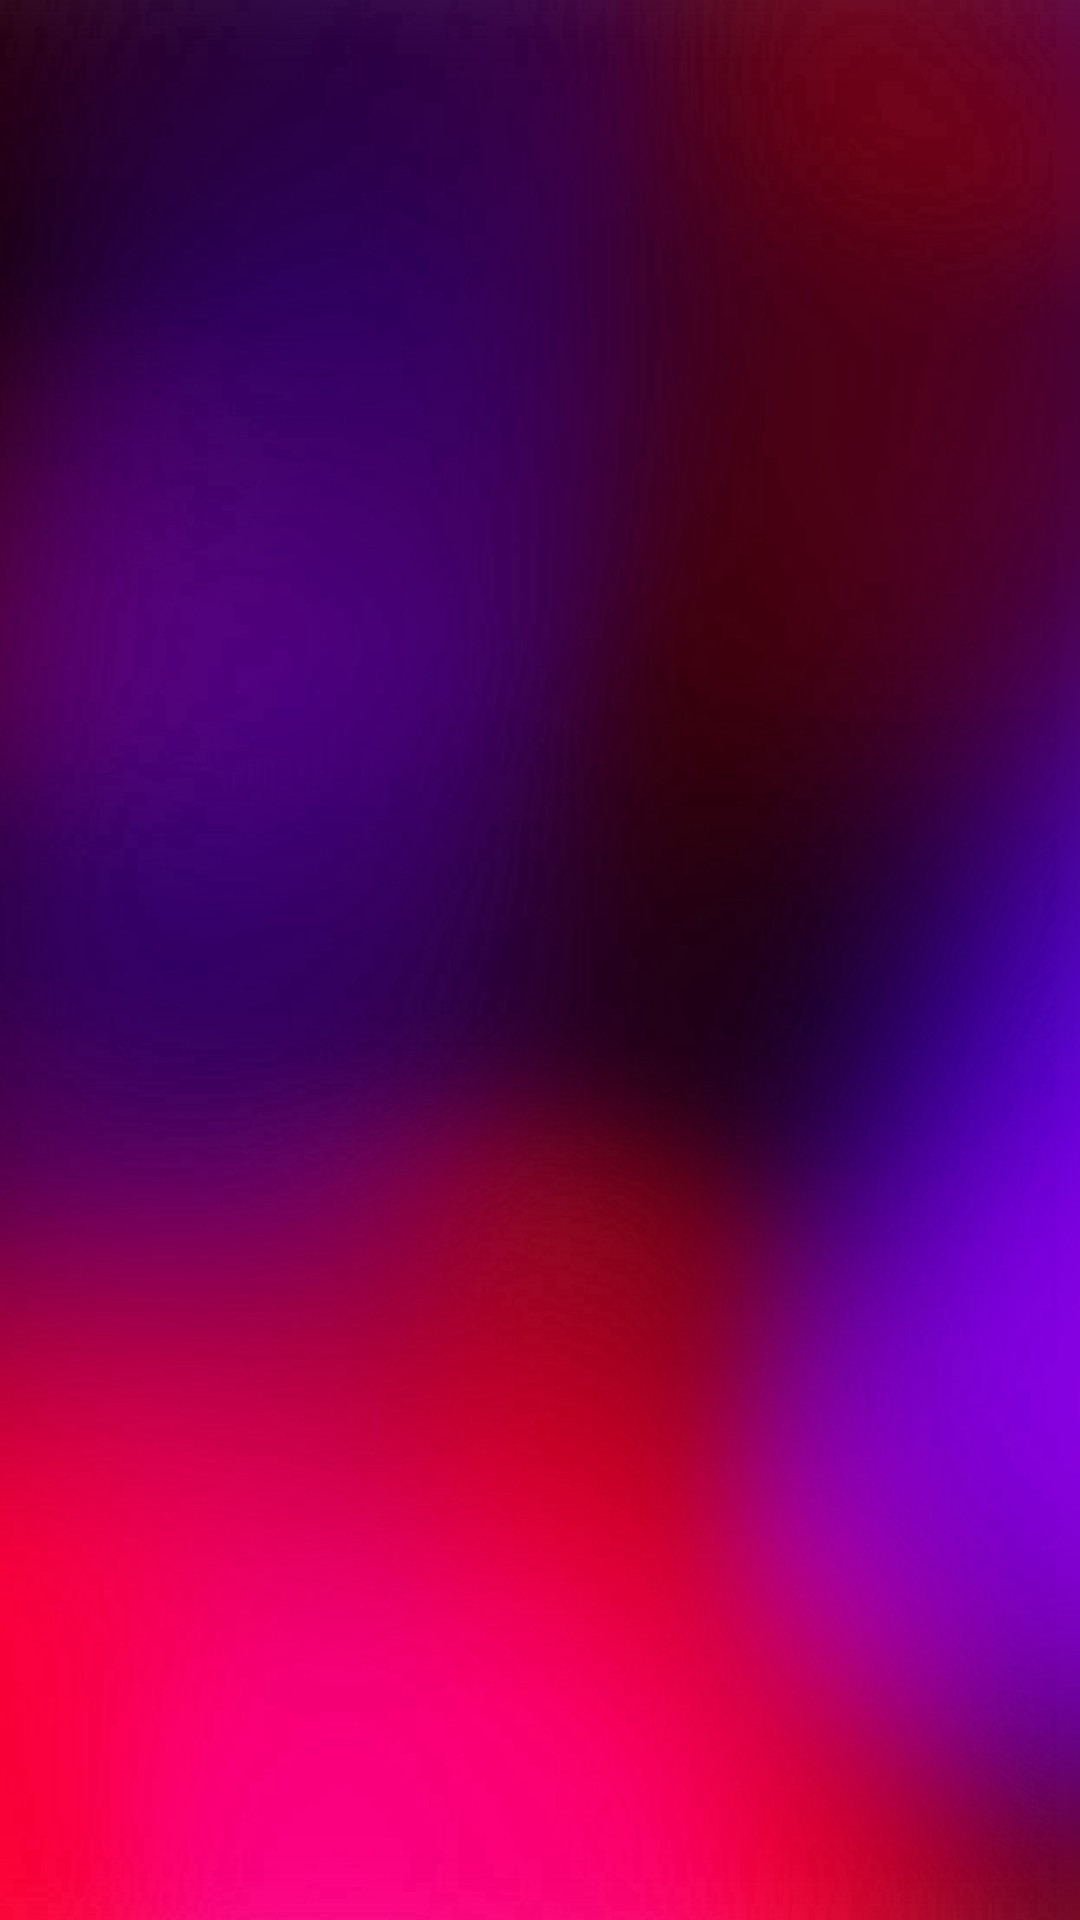 Purple Red Party Blur Gradation iPhone 8 wallpaper